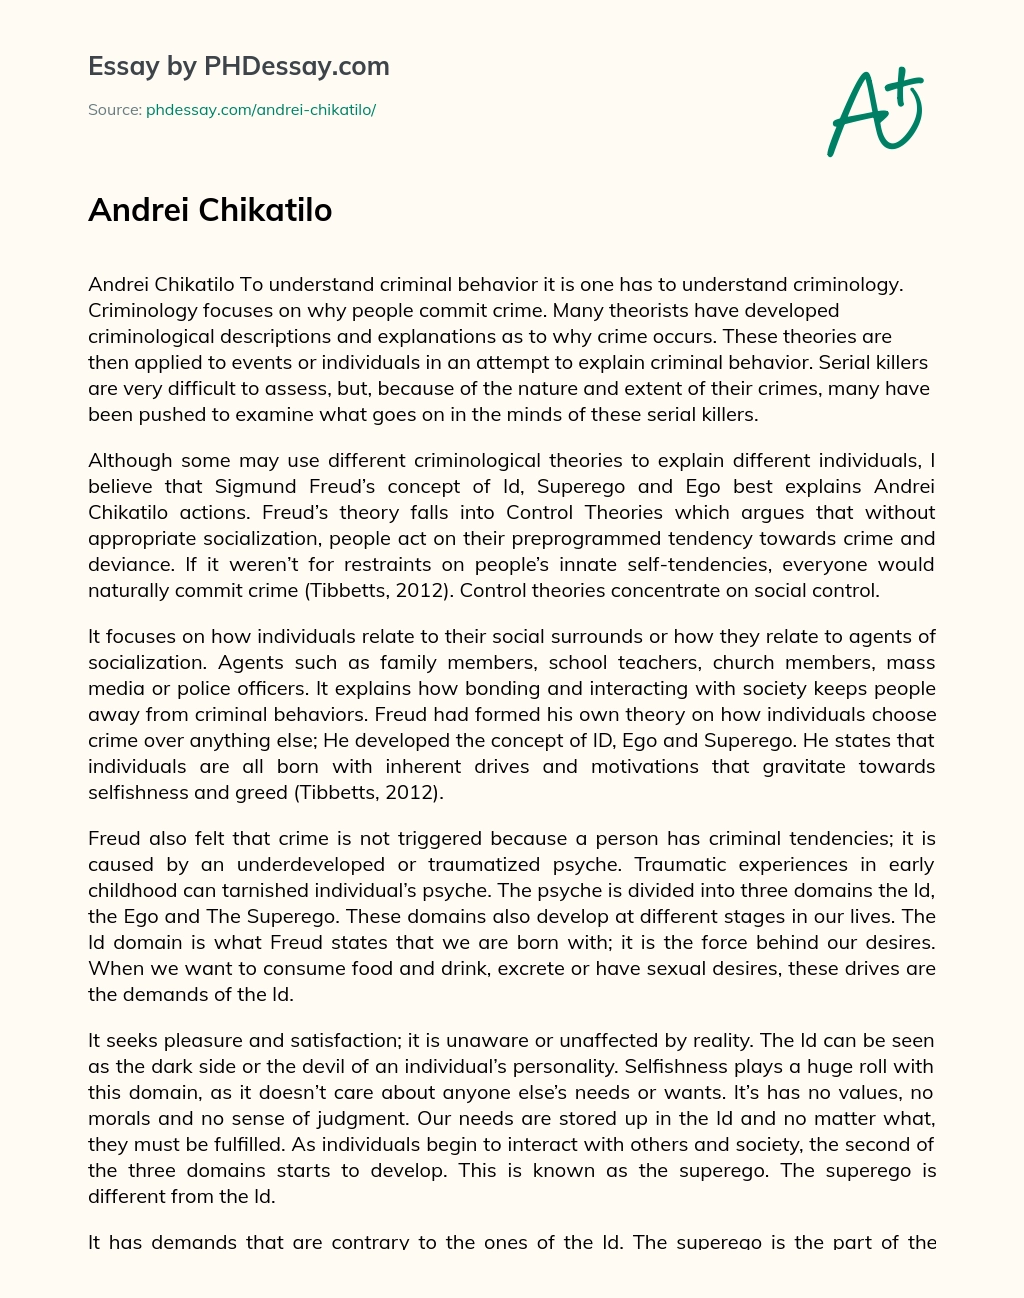 Andrei Chikatilo essay